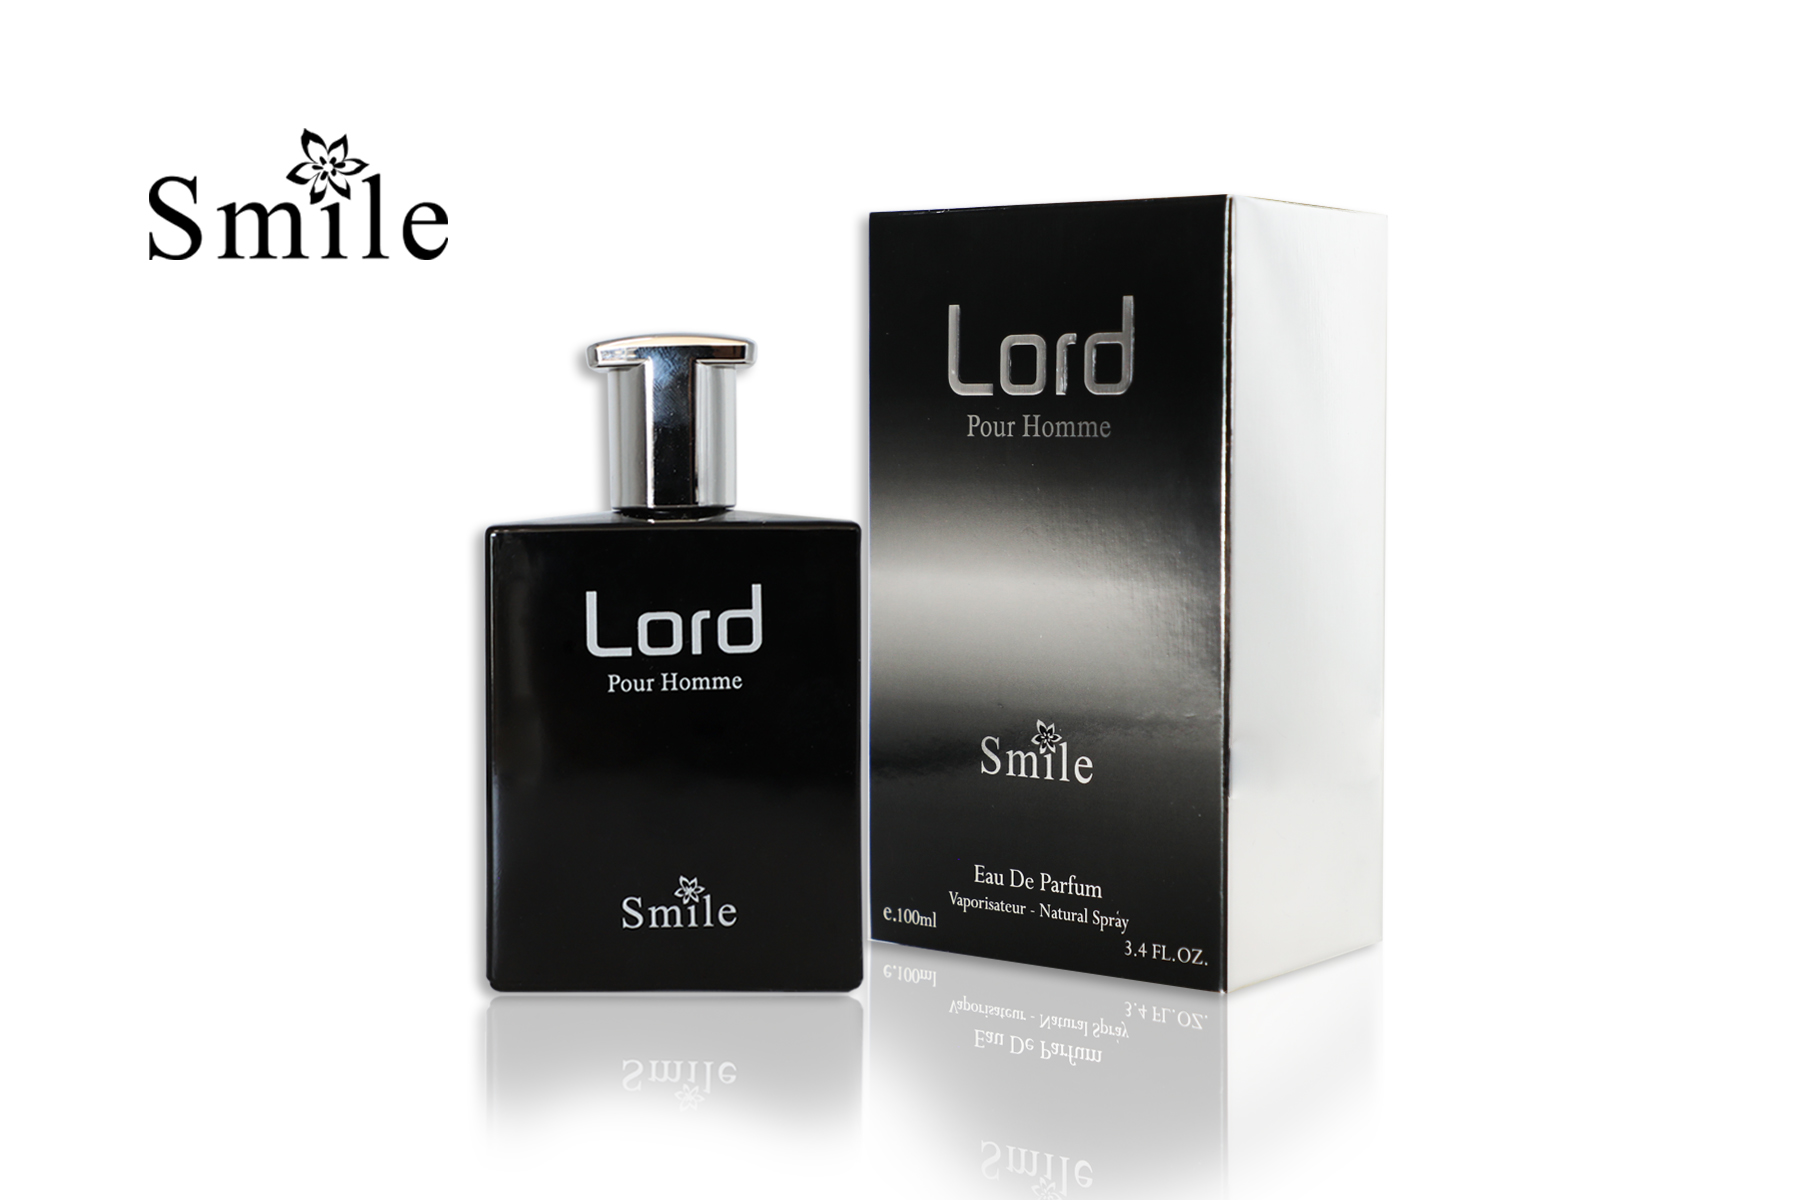 Smile lord pour homme (edp) – 100ml